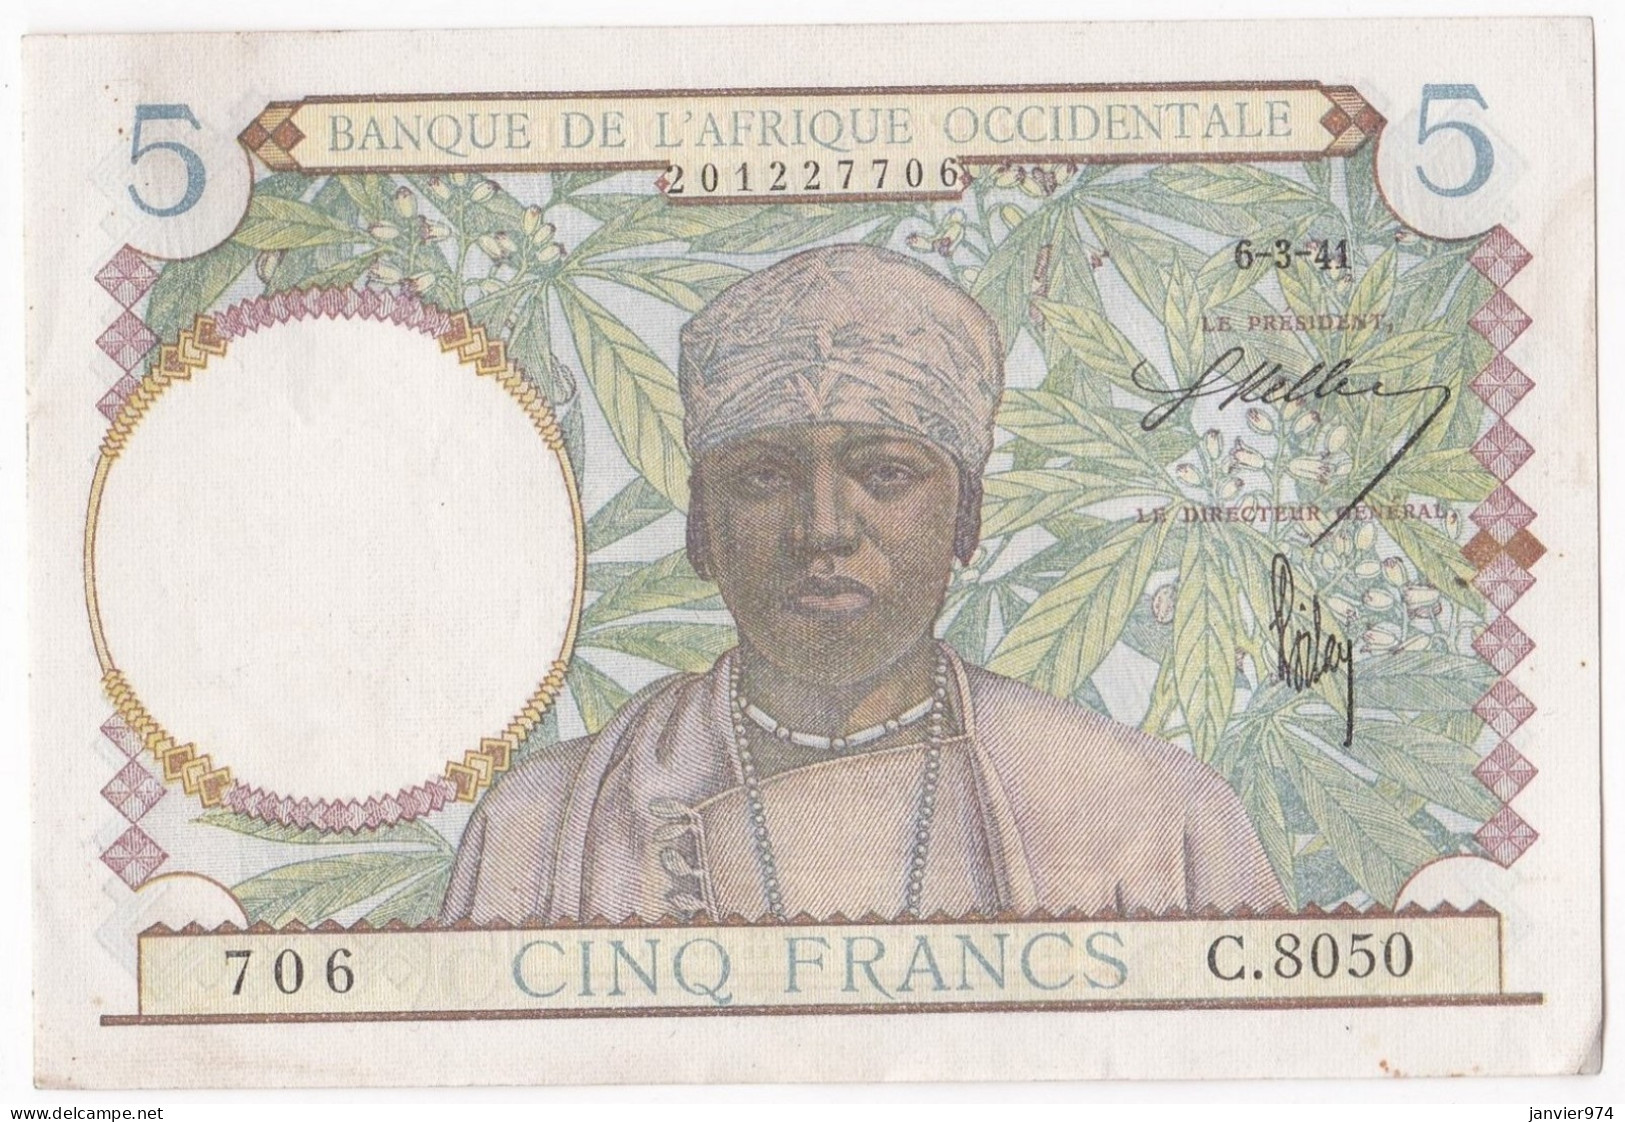 Banque De L'Afrique Occidentale 5 Francs 6 3 1941, Alph : C 8050 N° 706, Non Circuler, Avec Son Craquant D’origine - Other - Africa